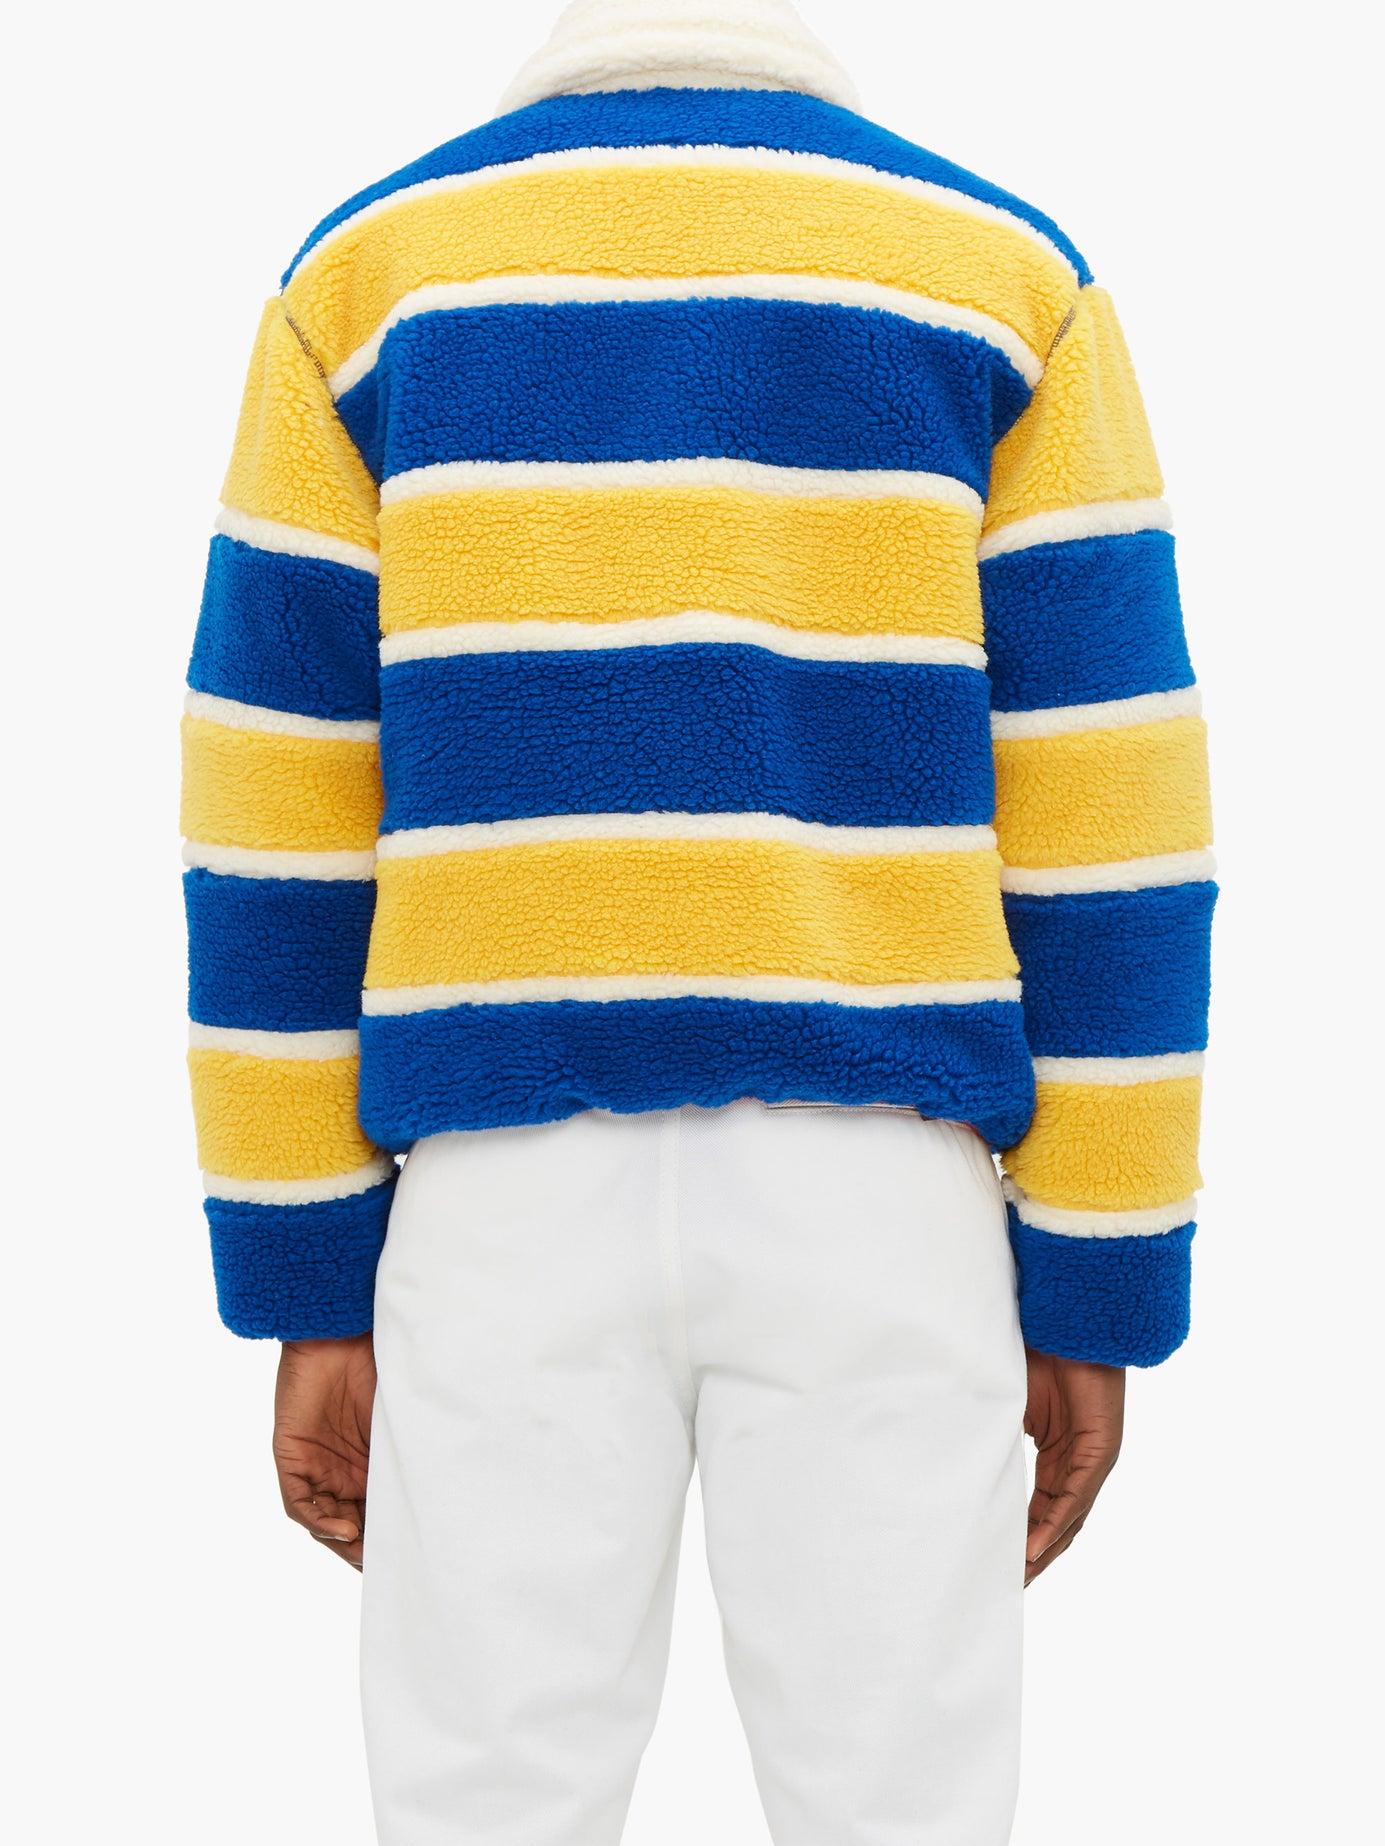 Marni Striped Fleece Jacket in Yellow Blue White (Blue) for Men - Lyst